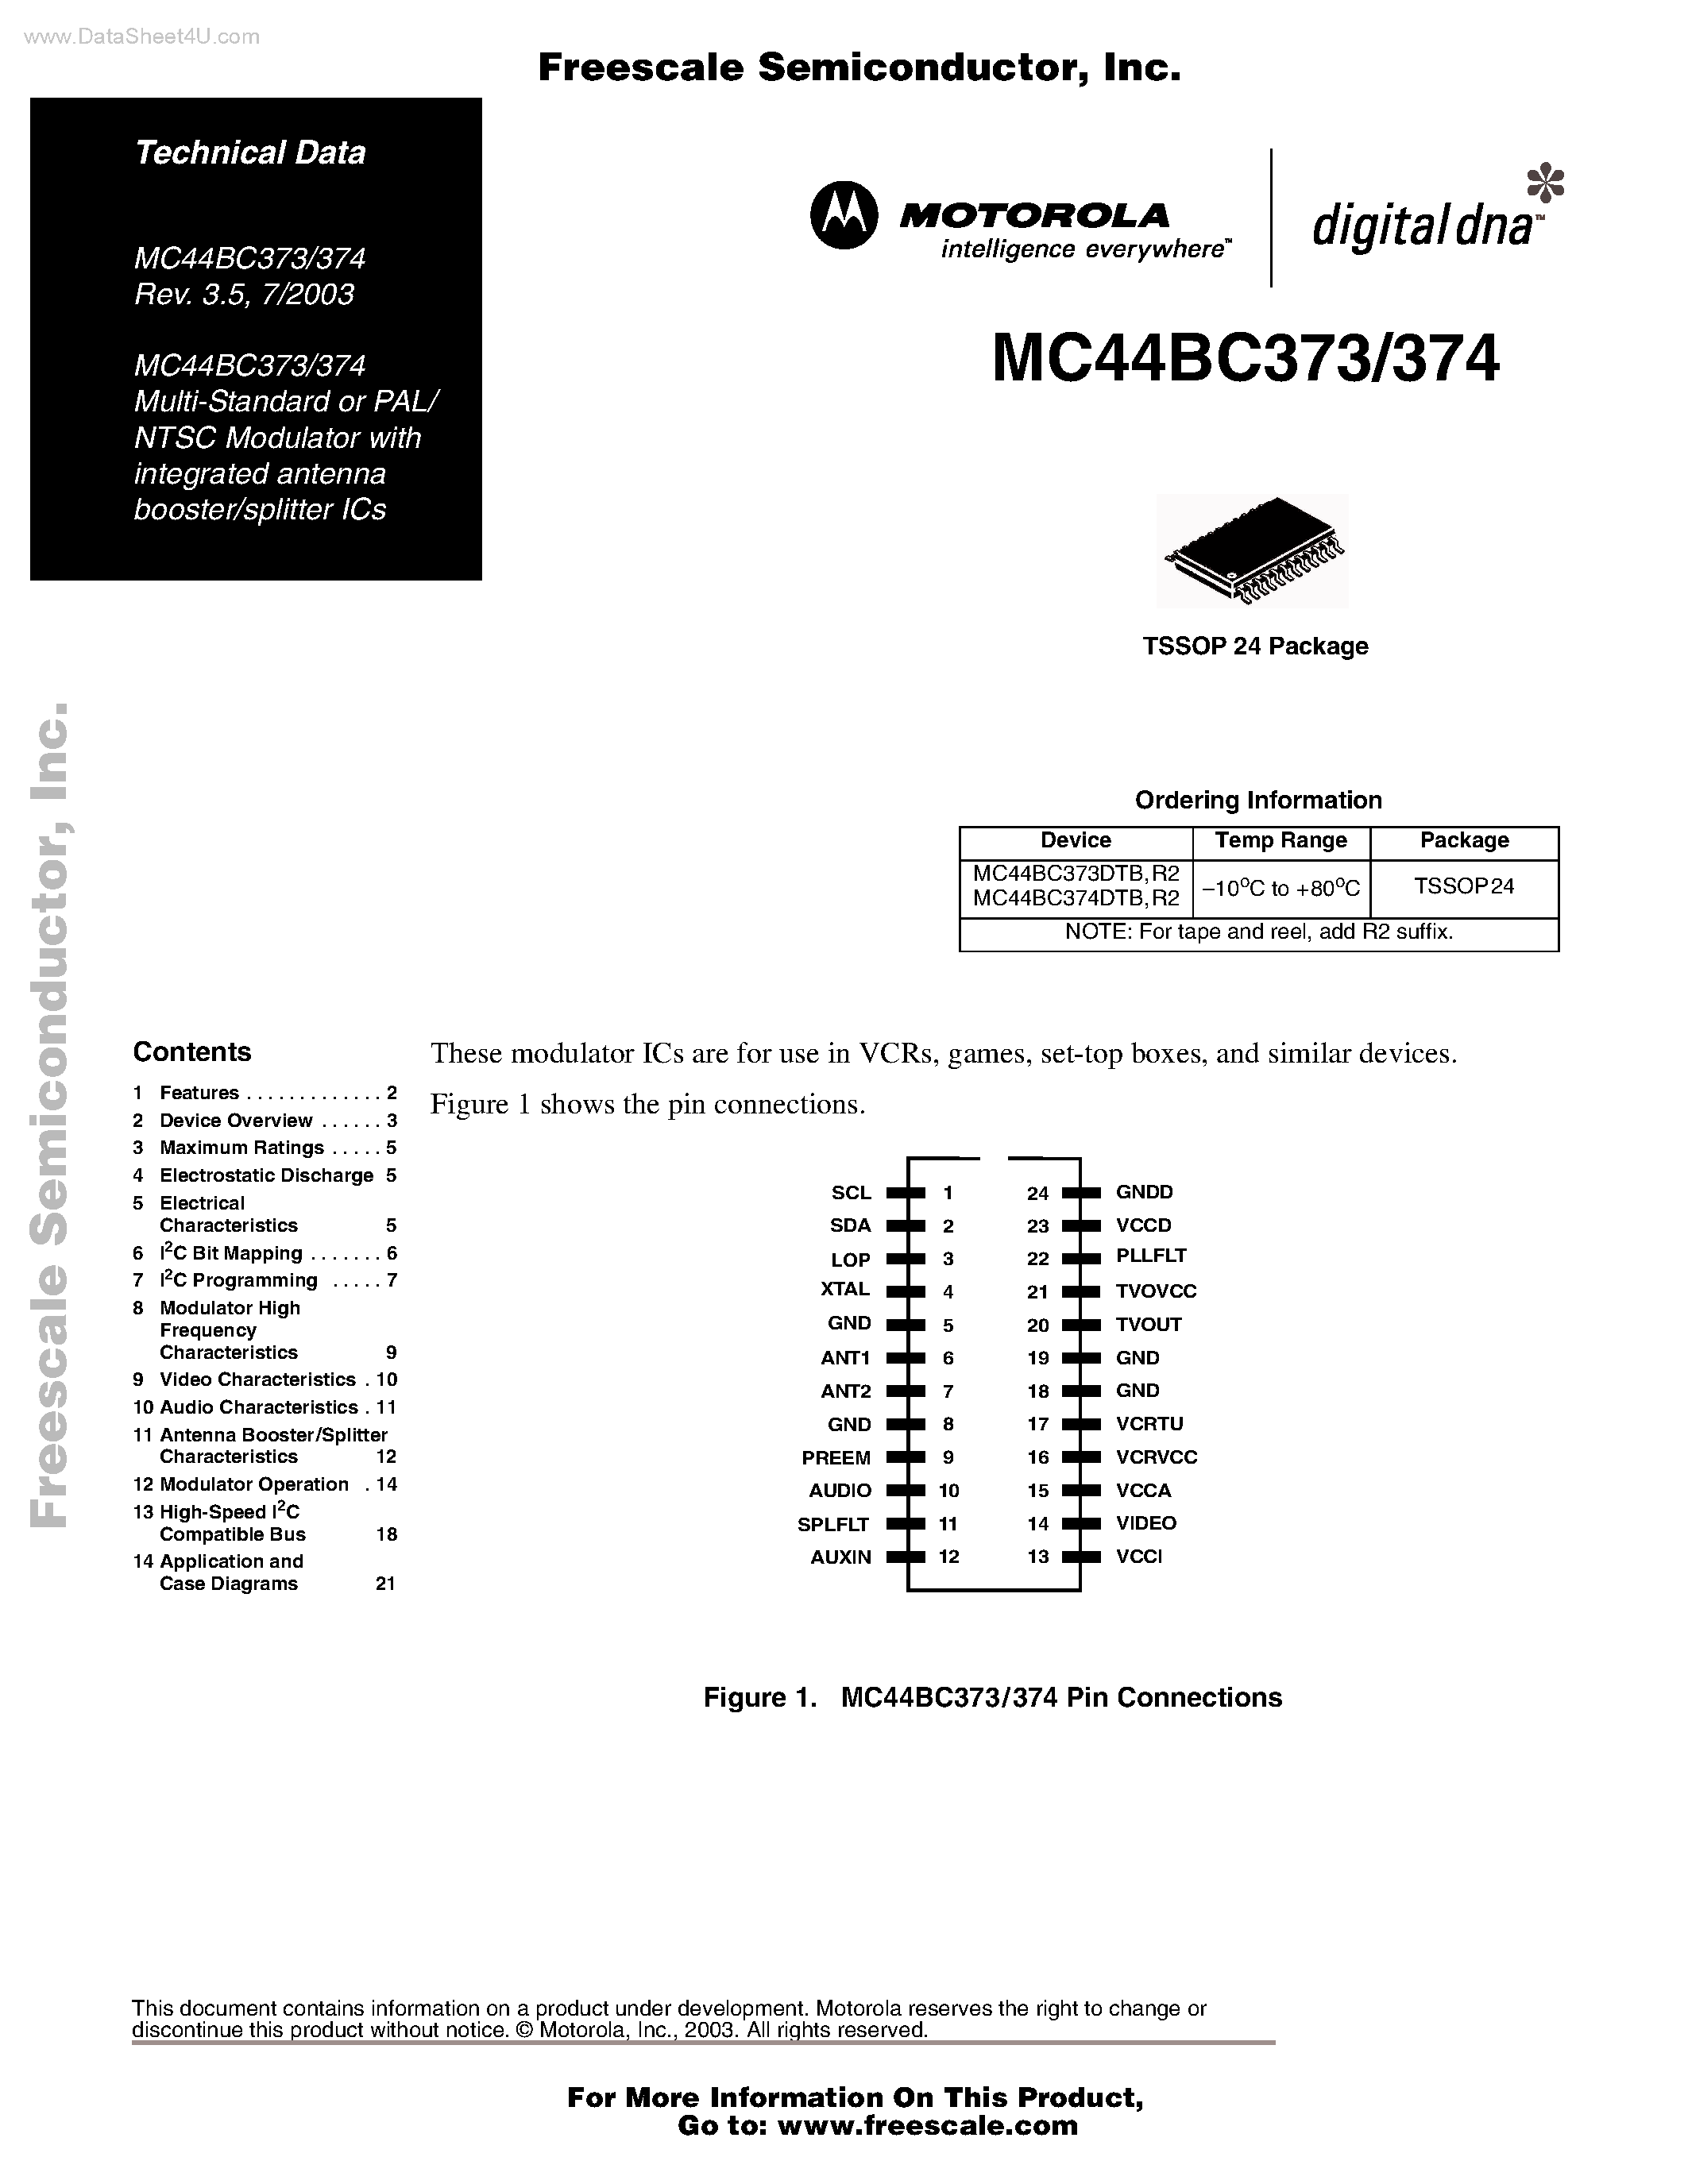 Даташит MC44BC373 - (MC44BC373 / MC44BC374) Multi-Standard or PAL/ NTSC Modulator страница 1